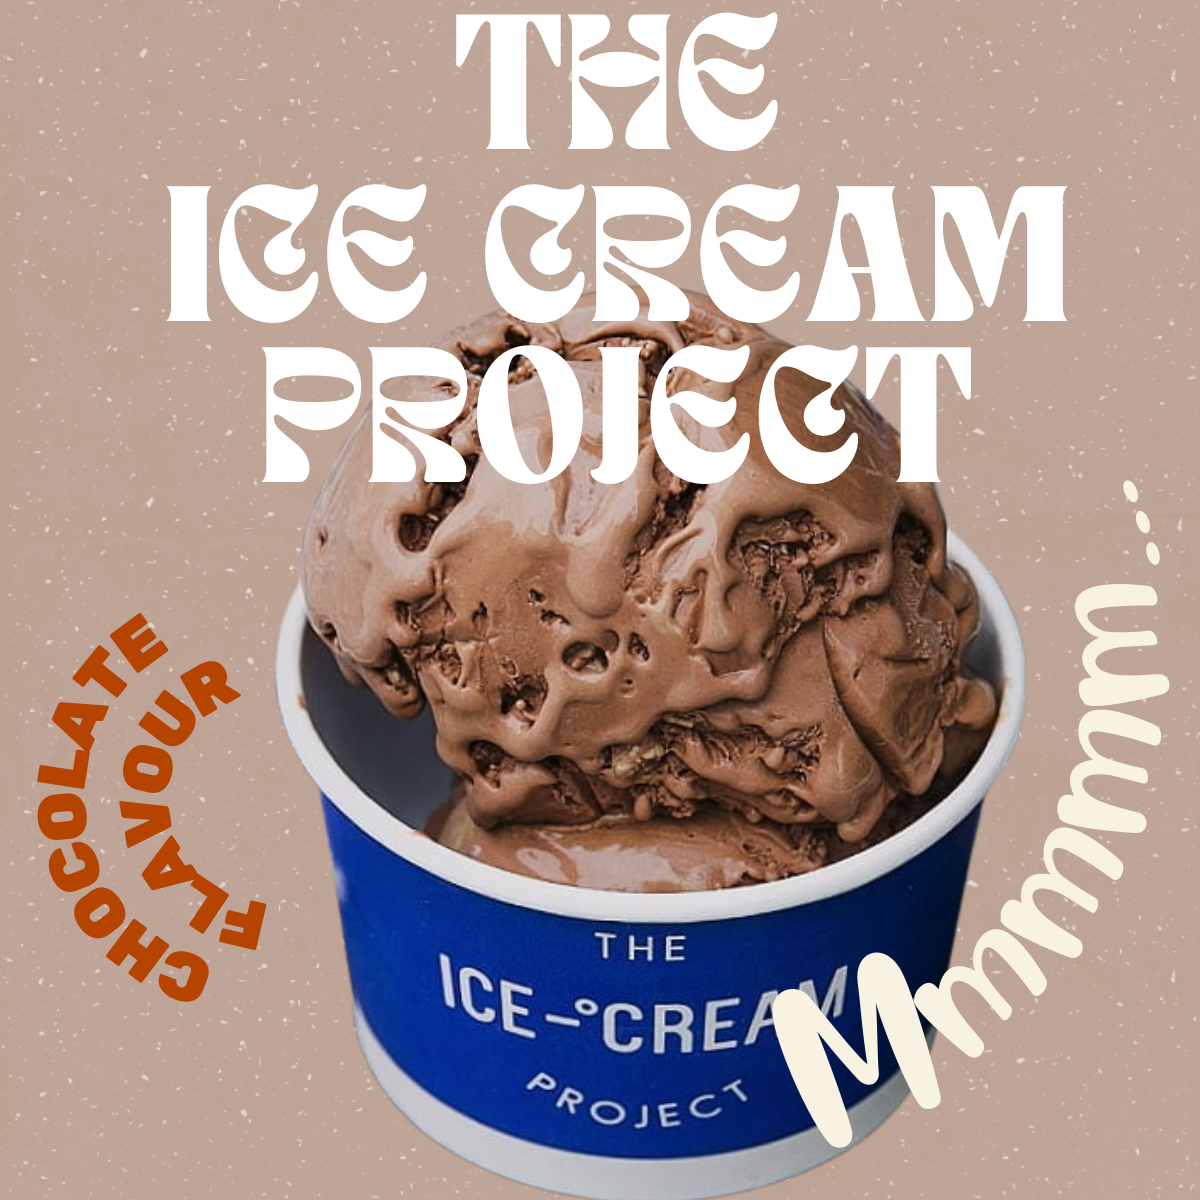 The Ice Cream Project